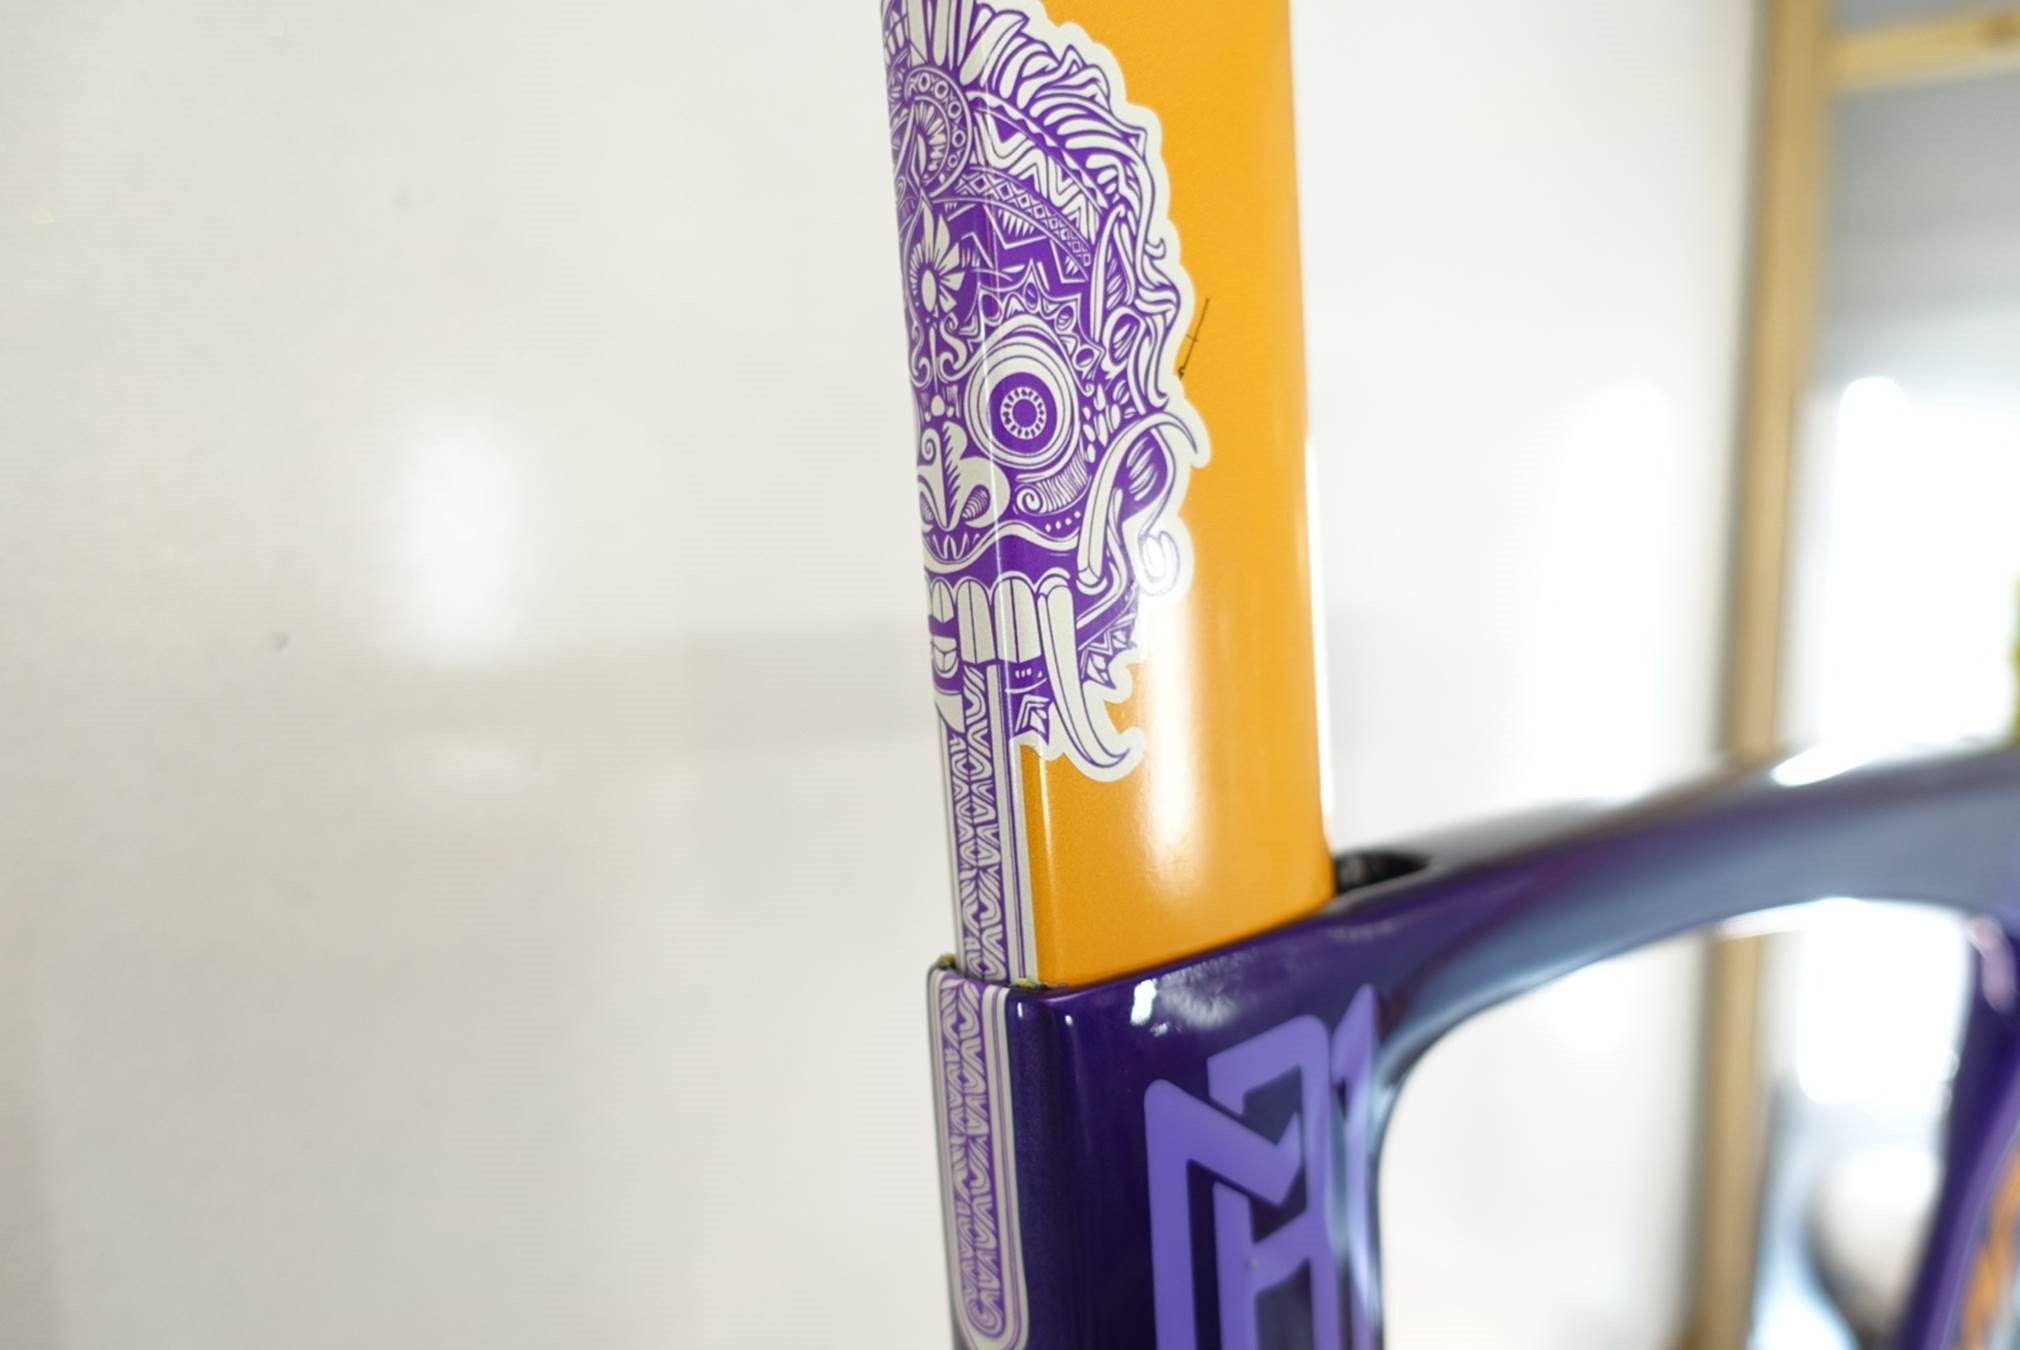 rachel mcbride's purple demon serios bike